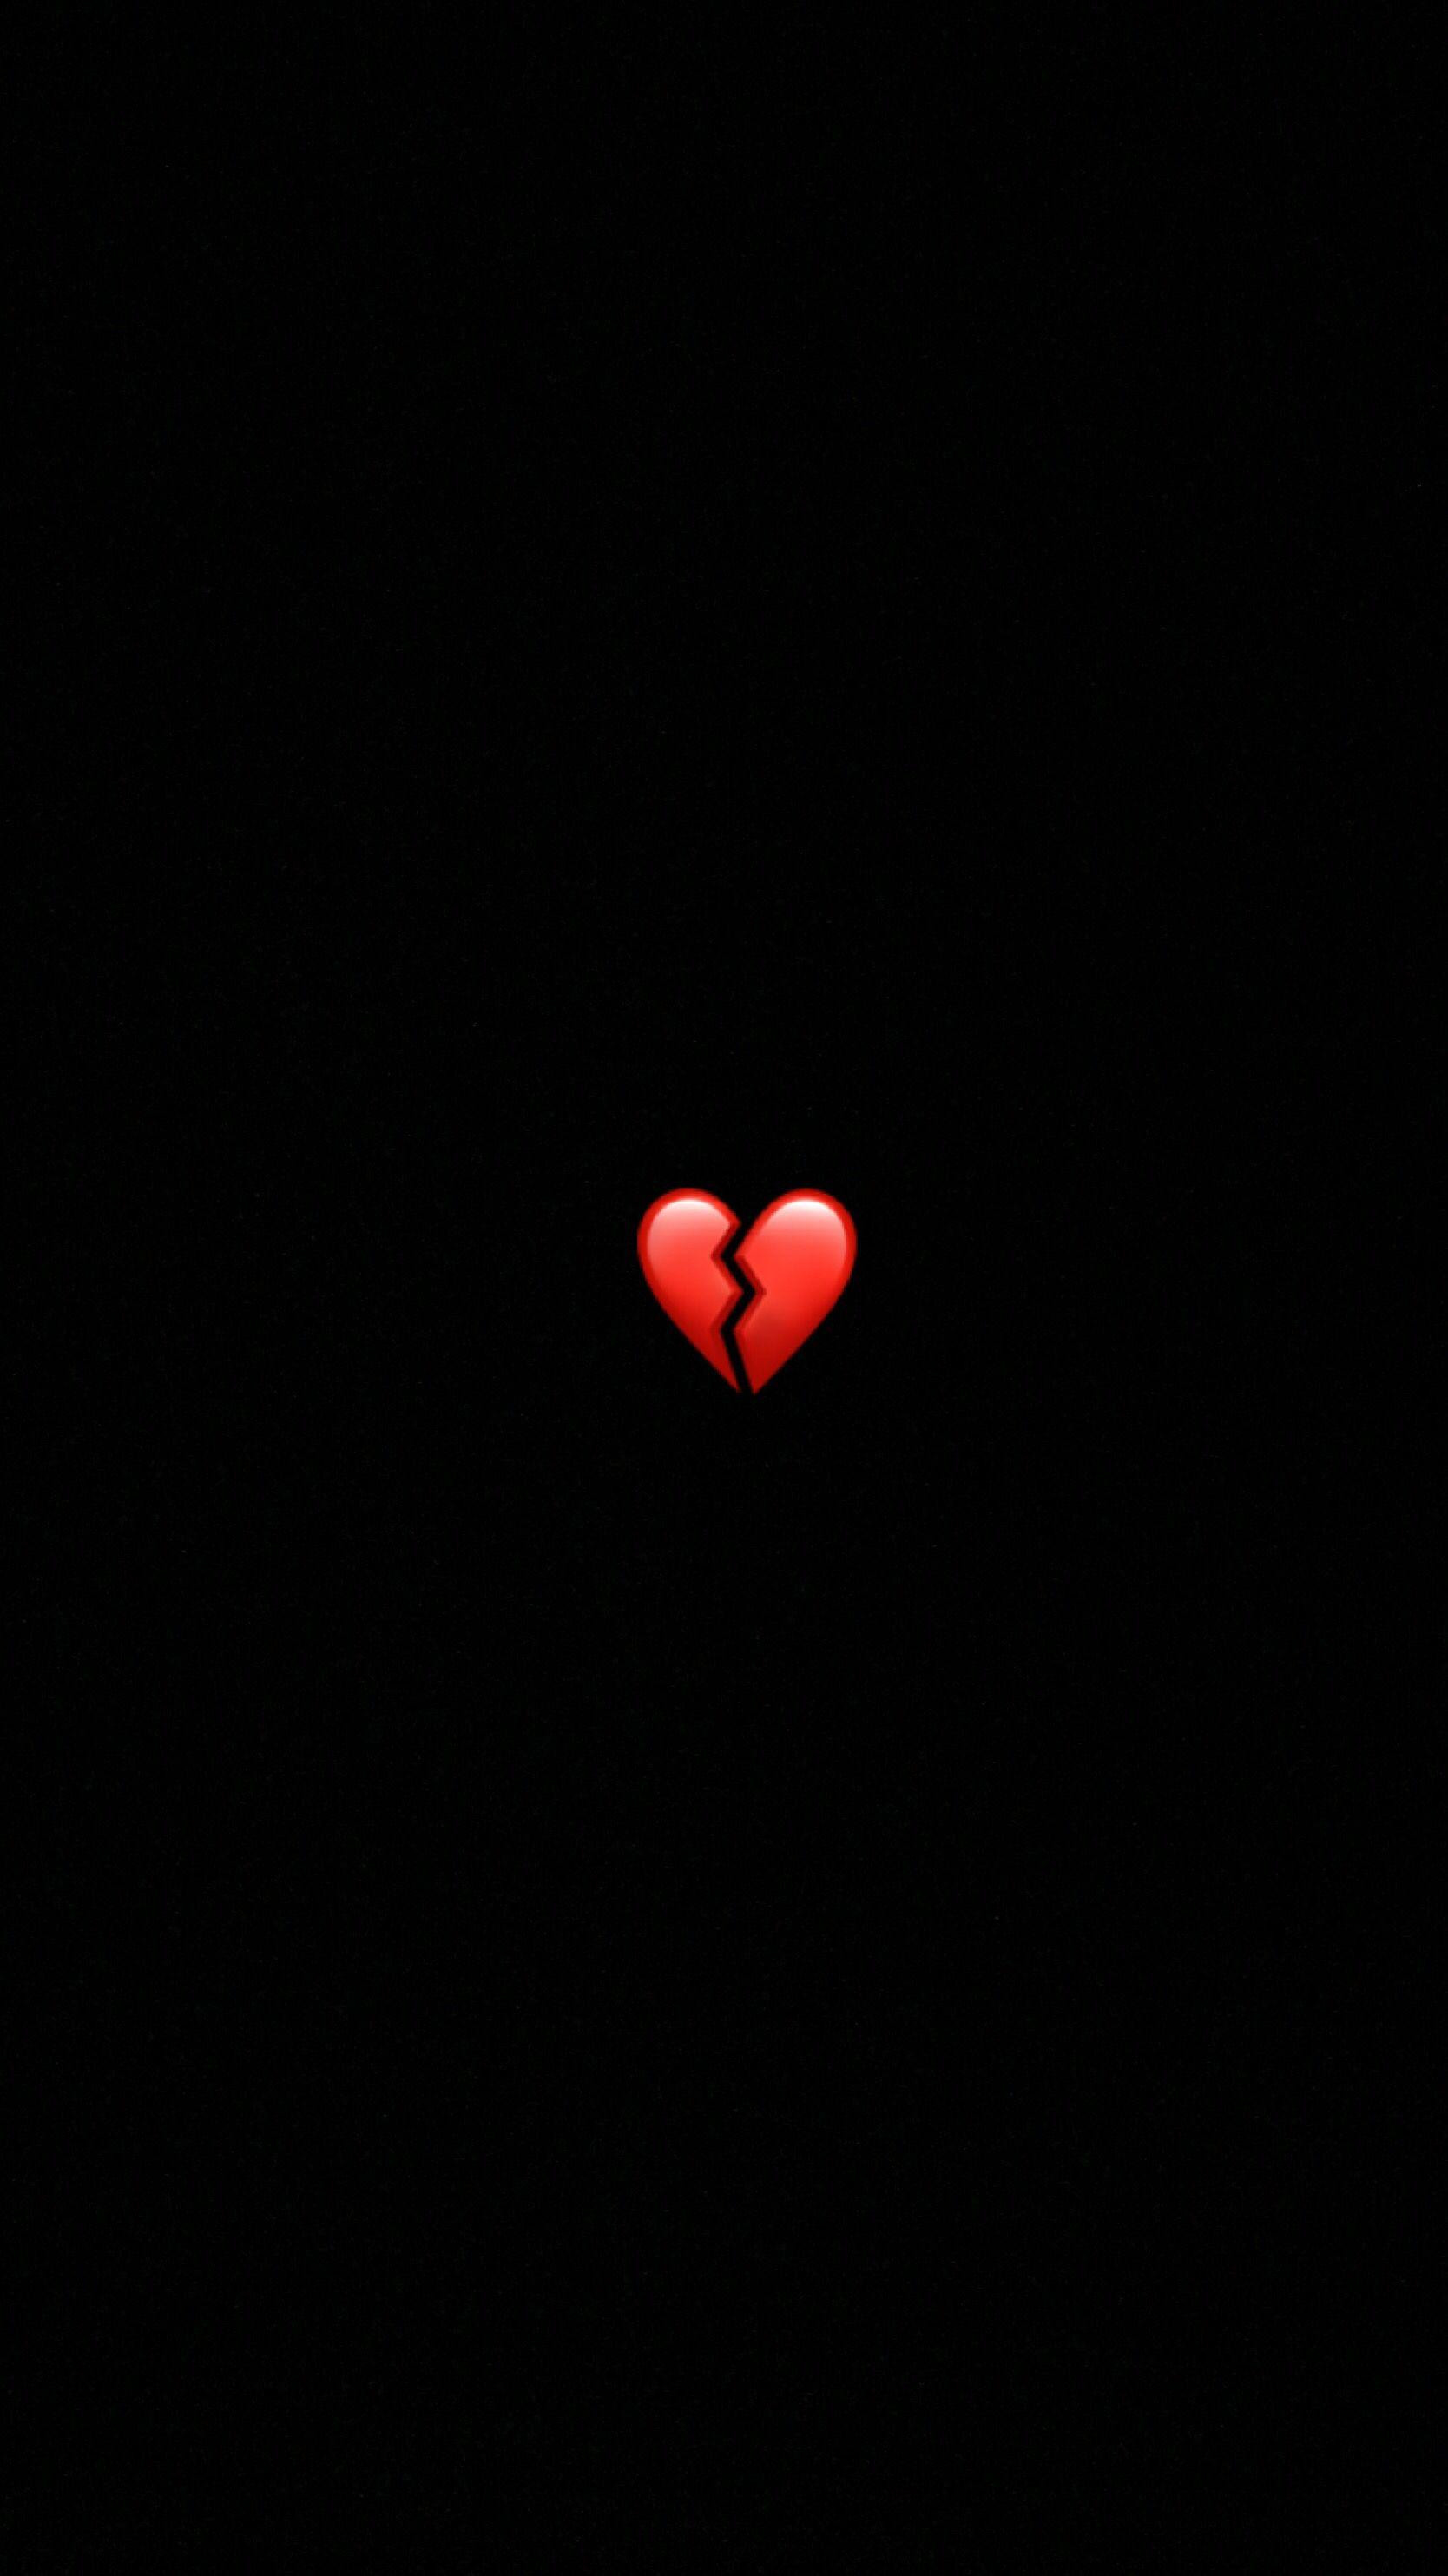 just a broken heart :. Broken heart wallpaper, Heart wallpaper